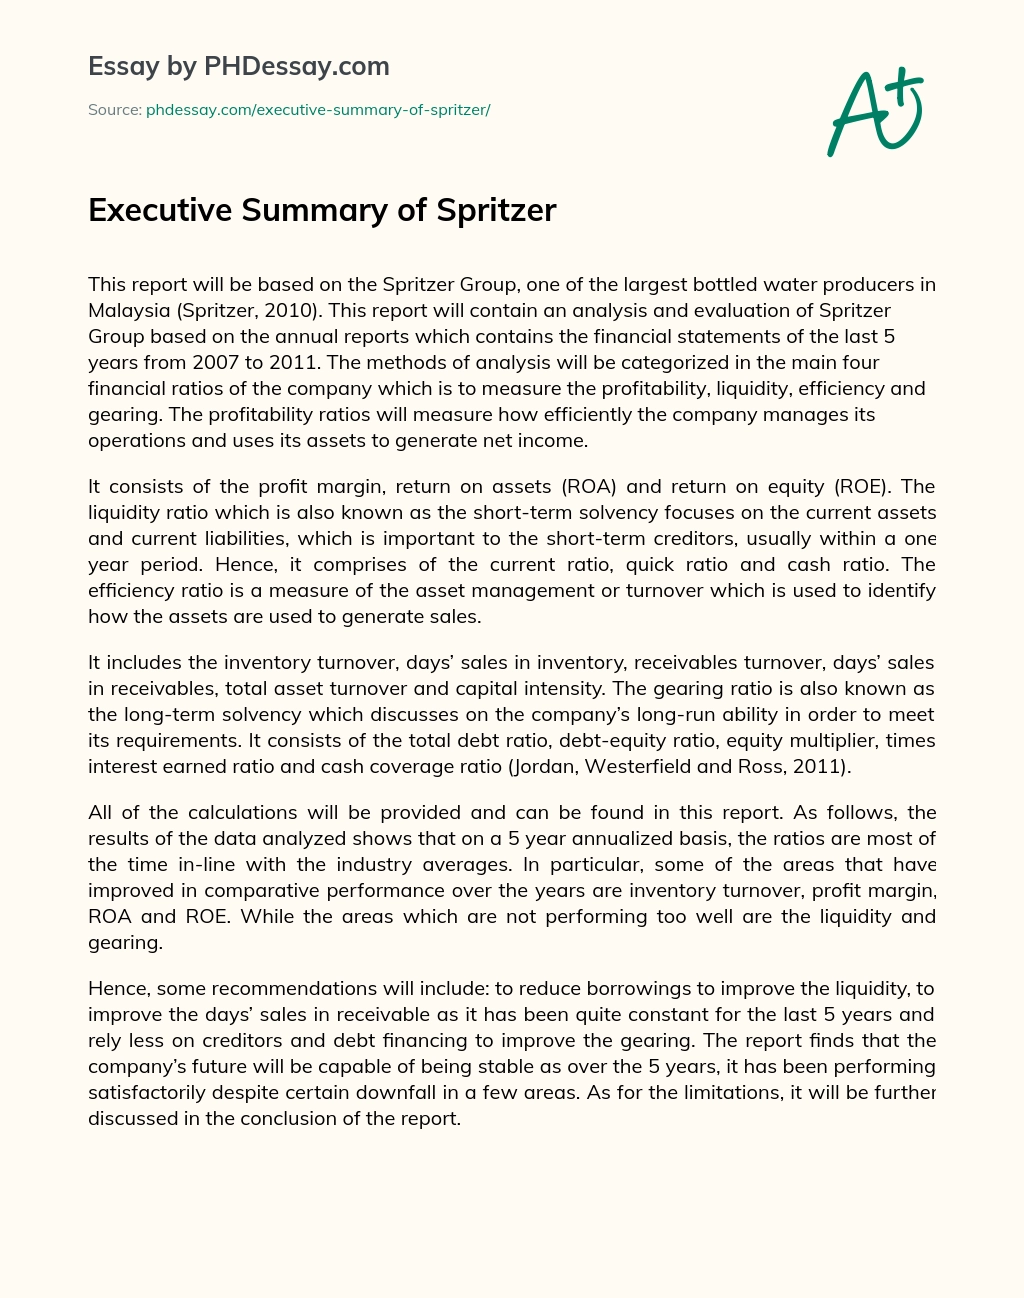 Executive Summary of Spritzer essay